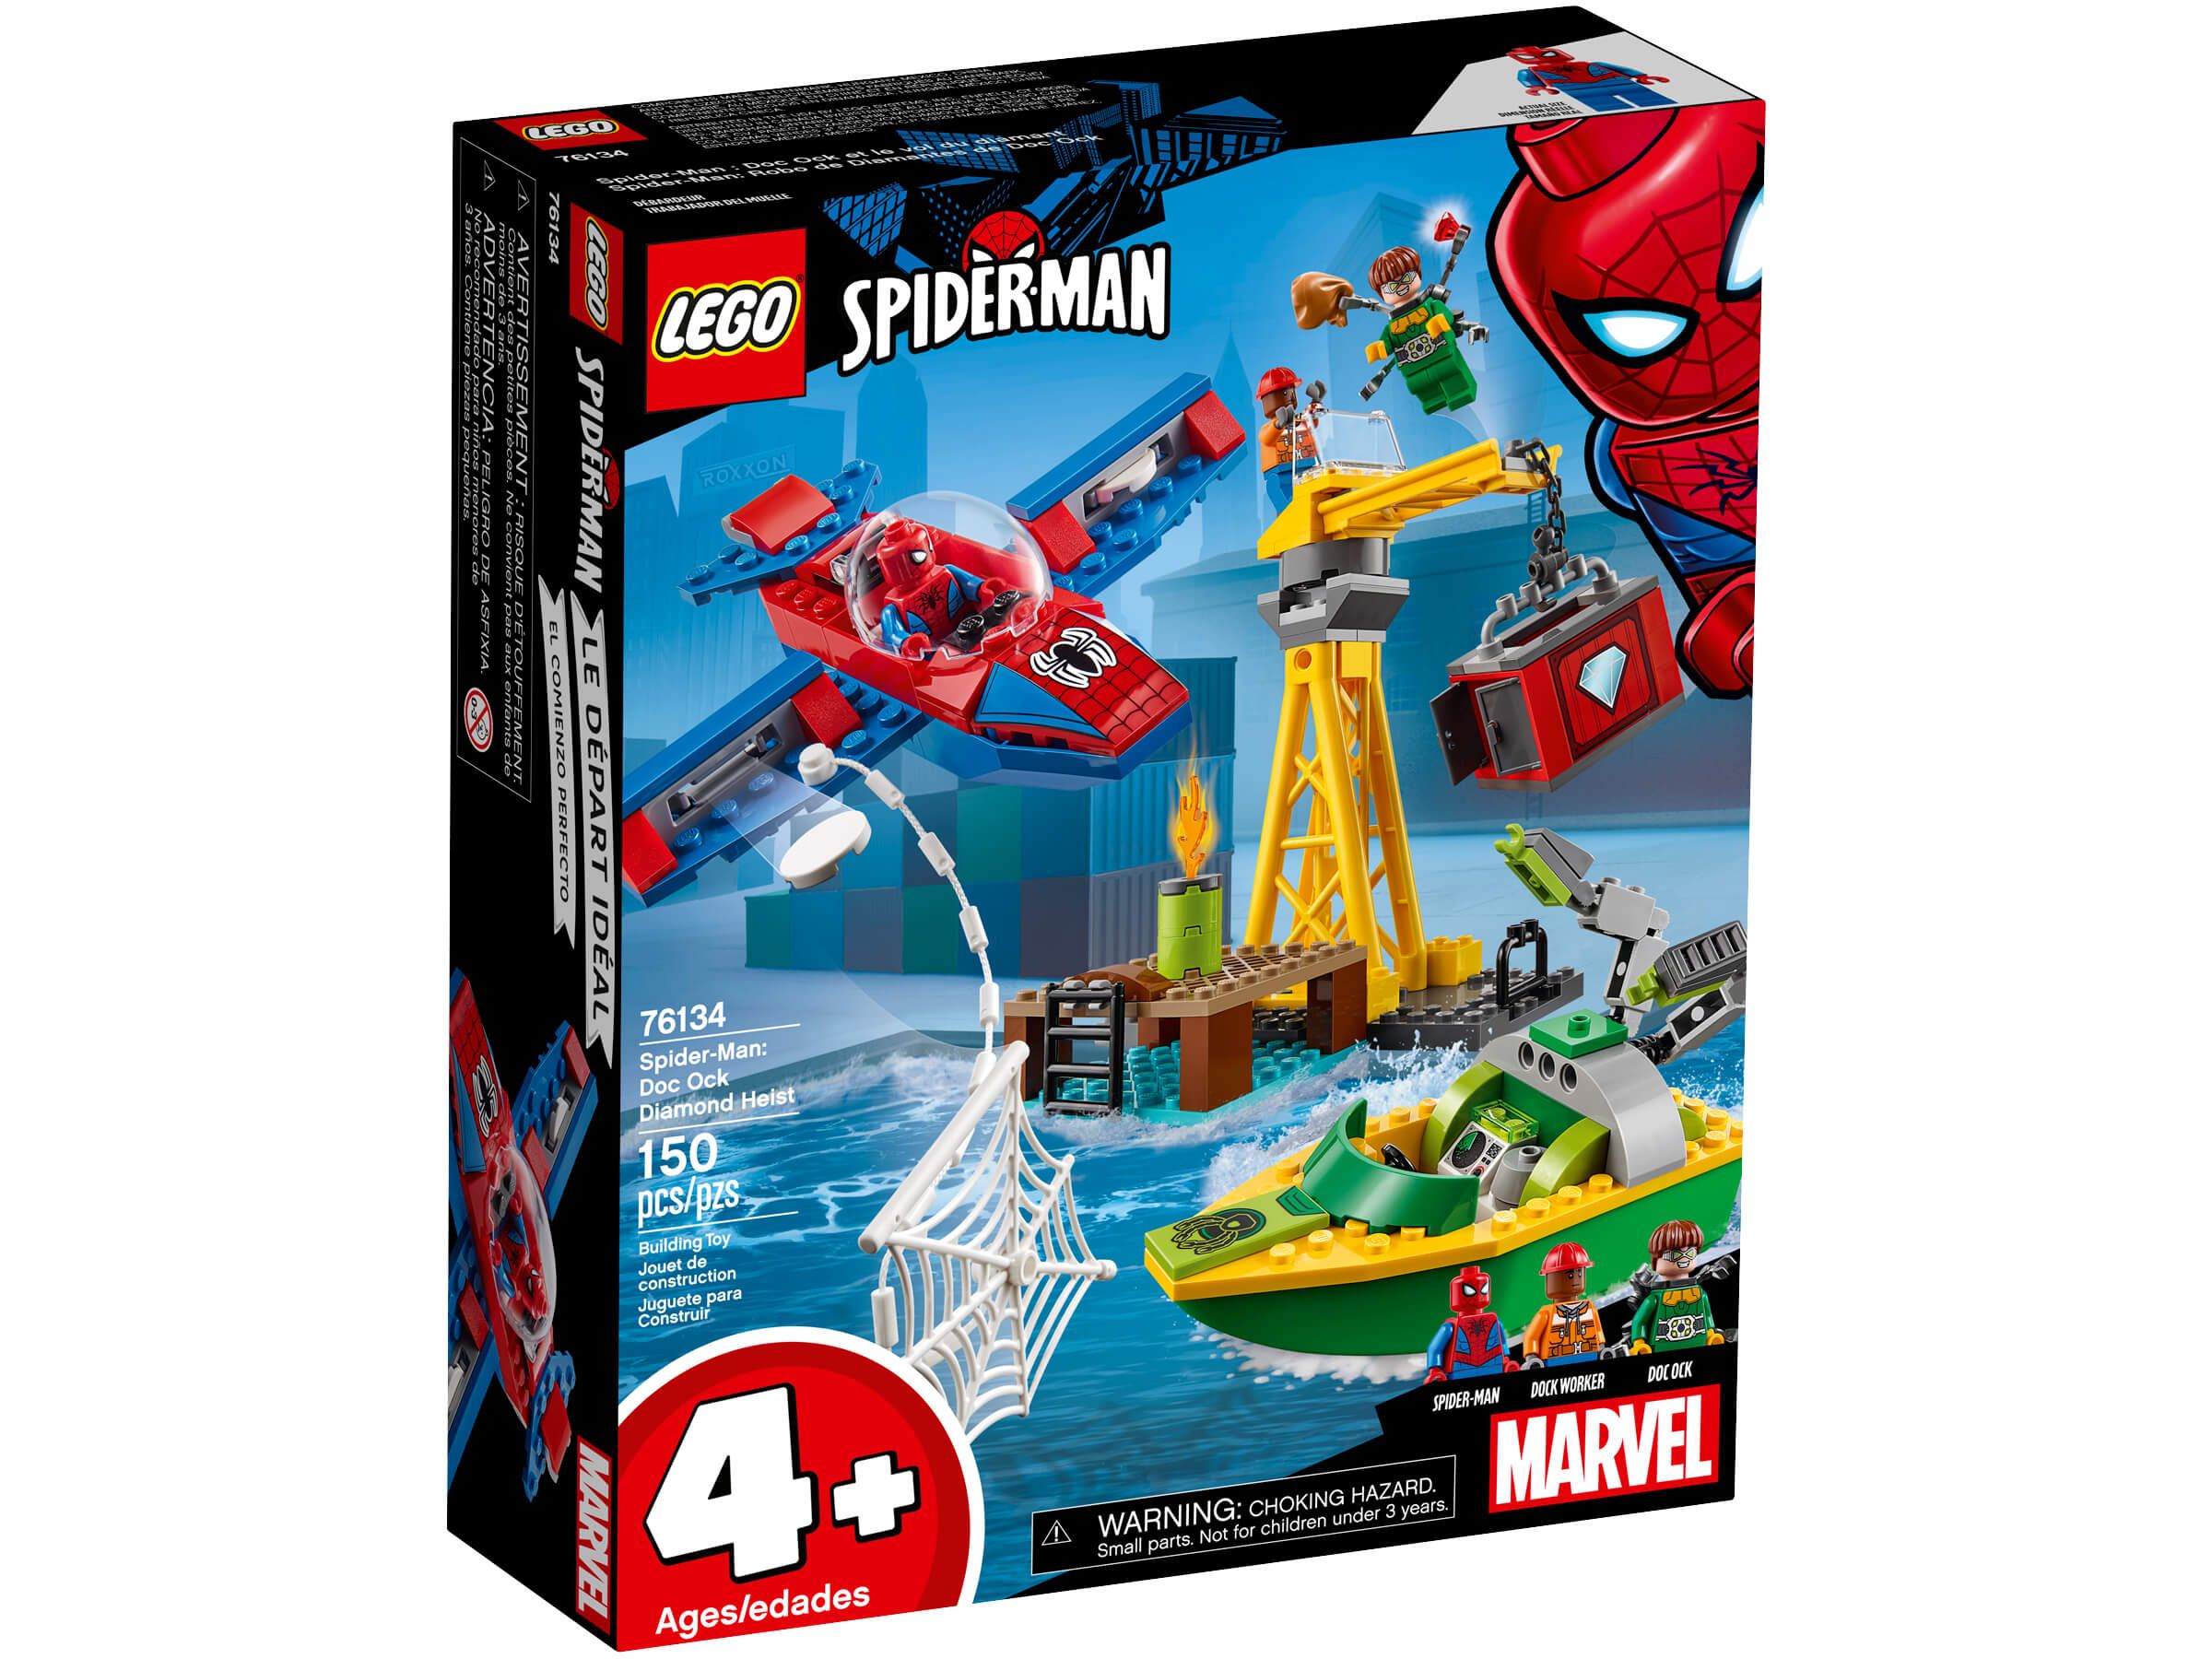 LEGO Super Heroes 76134 Spider-Man: Dock Ock Diamond LEGO_76134_Box1_v39_2400.jpg